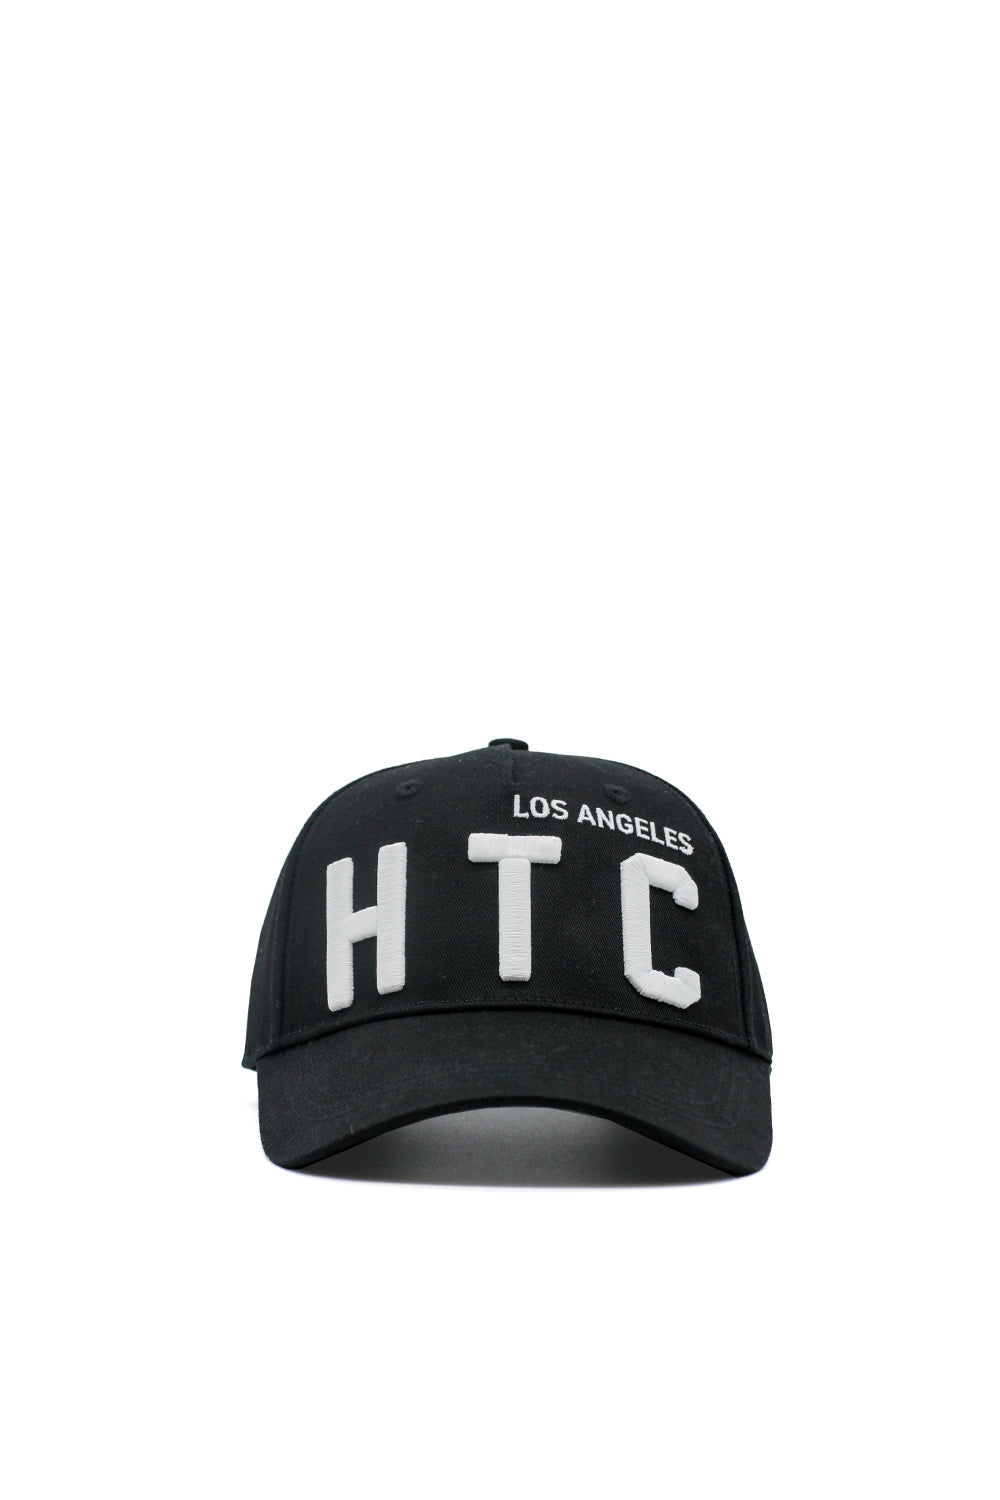 HTC LOS ANGELES BASEBALL CAP